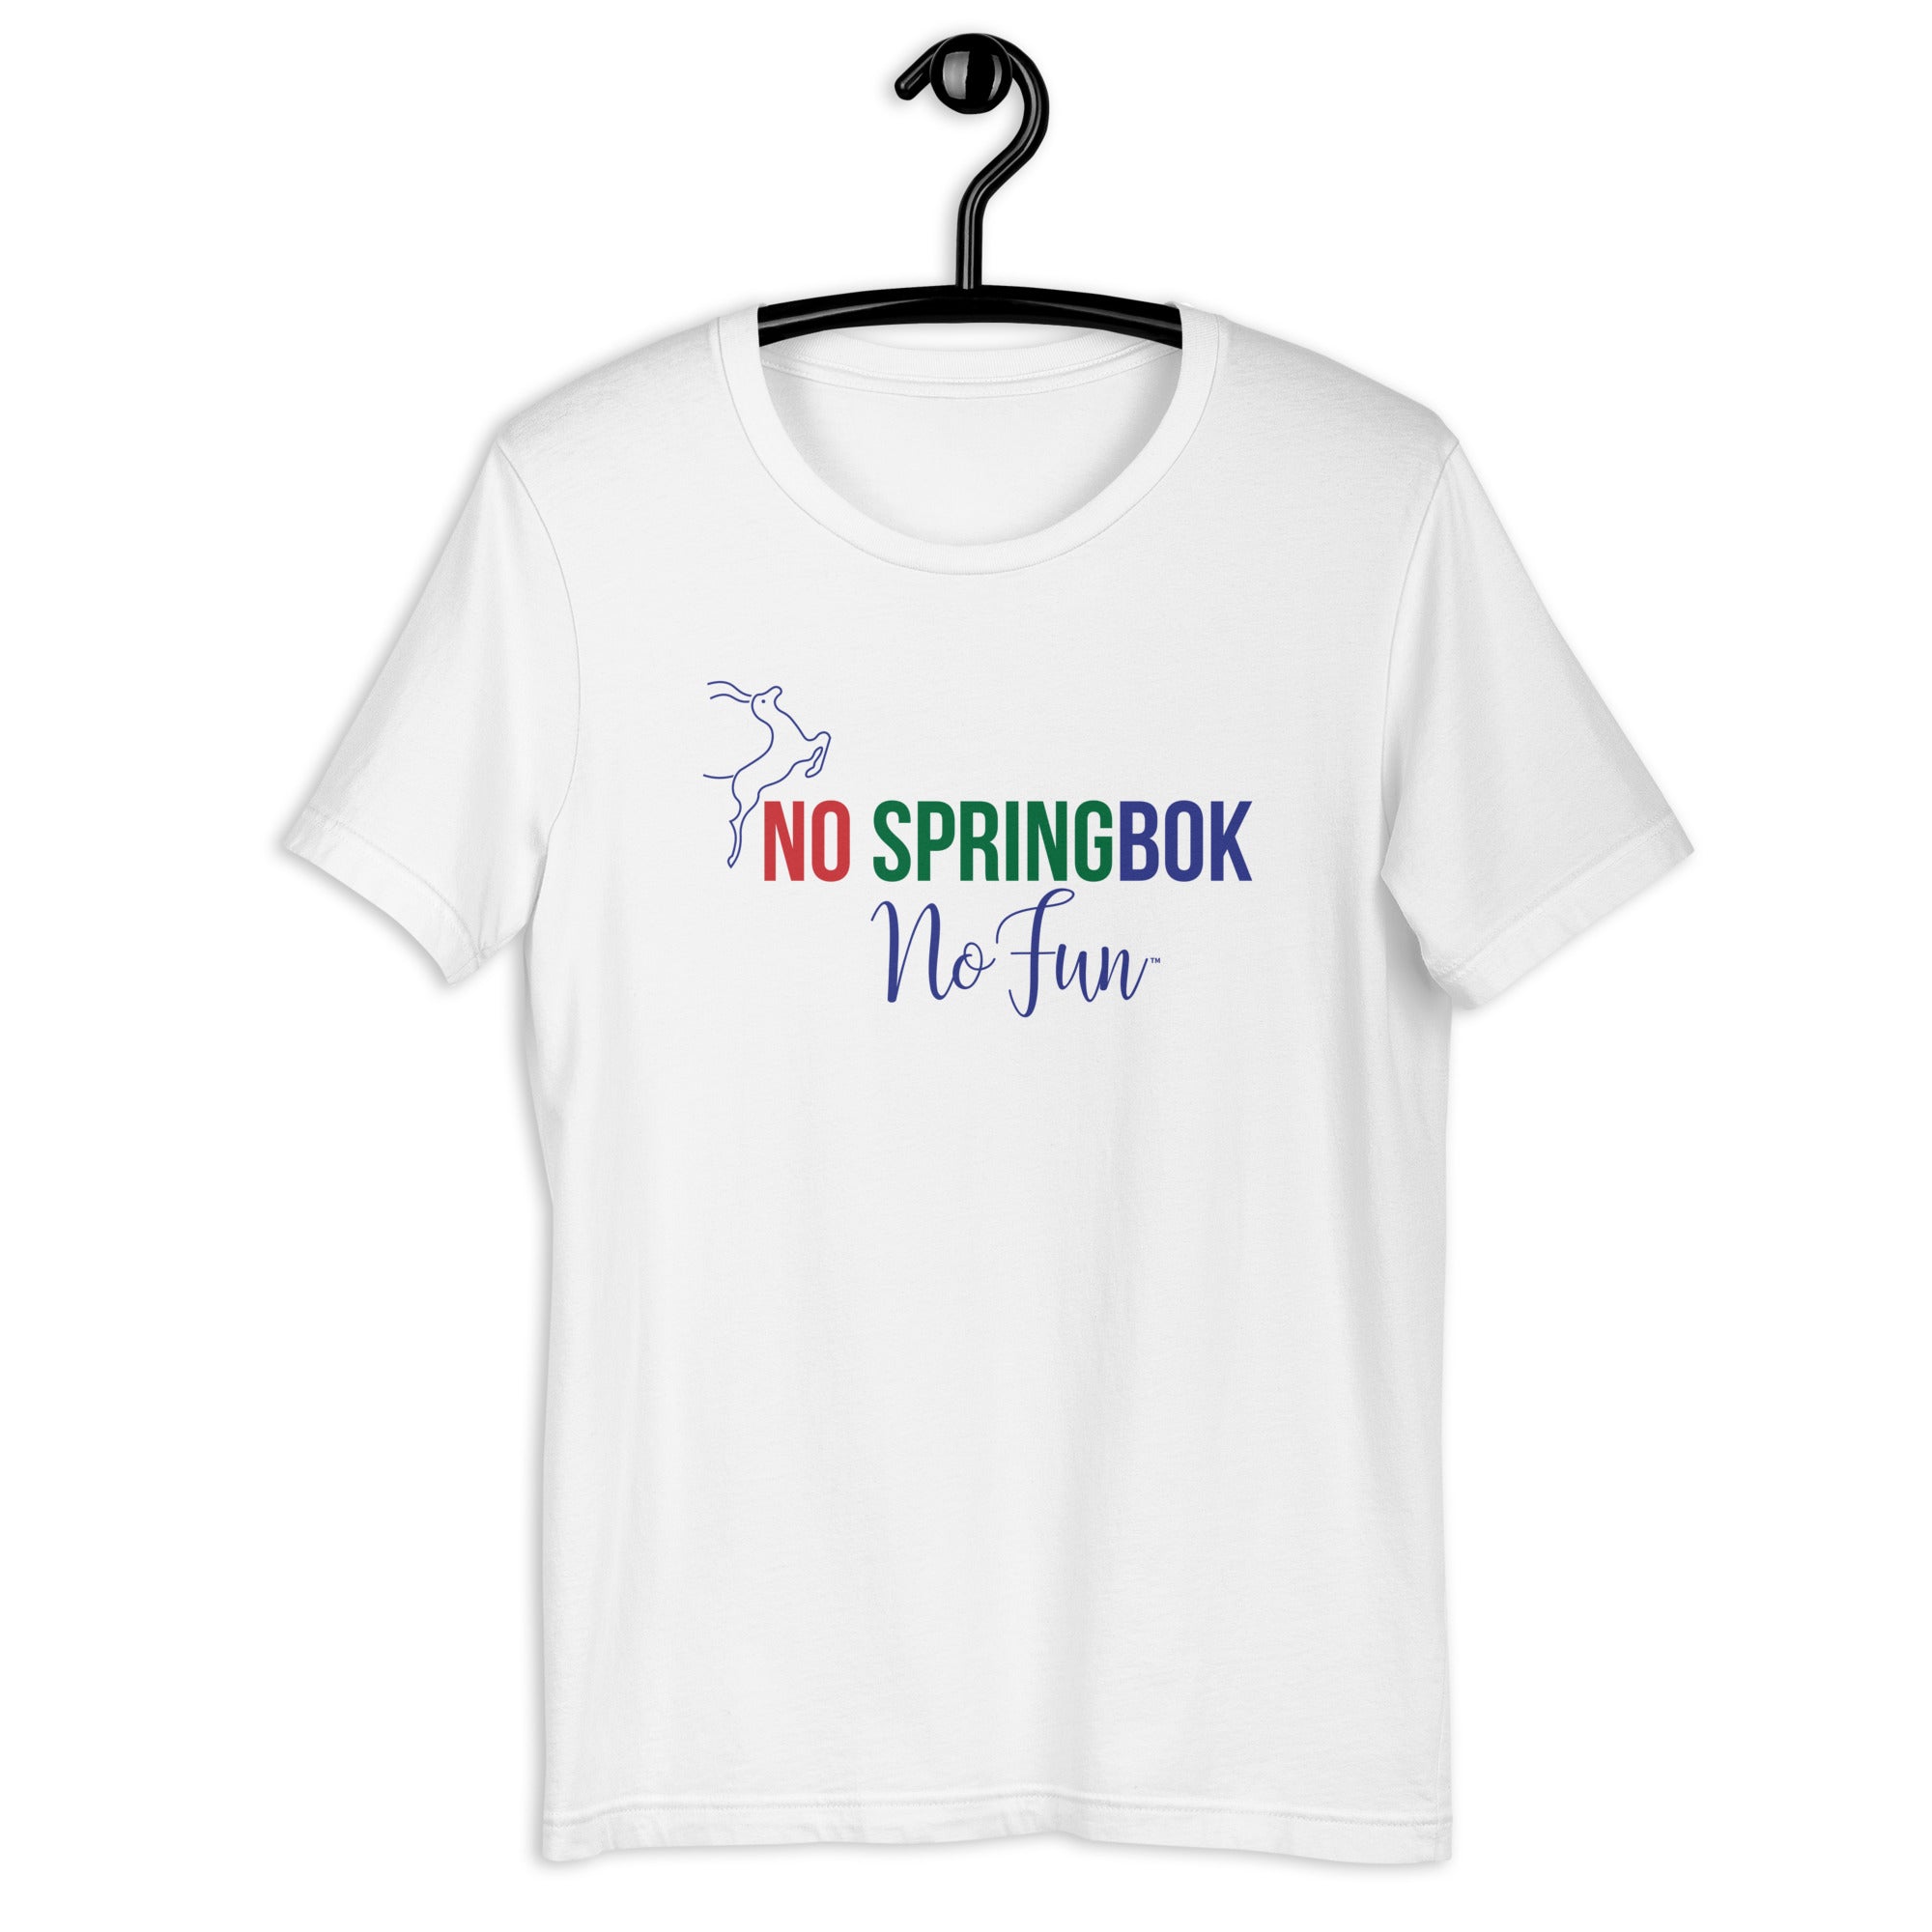 No Springbok No Fun, T-Shirt